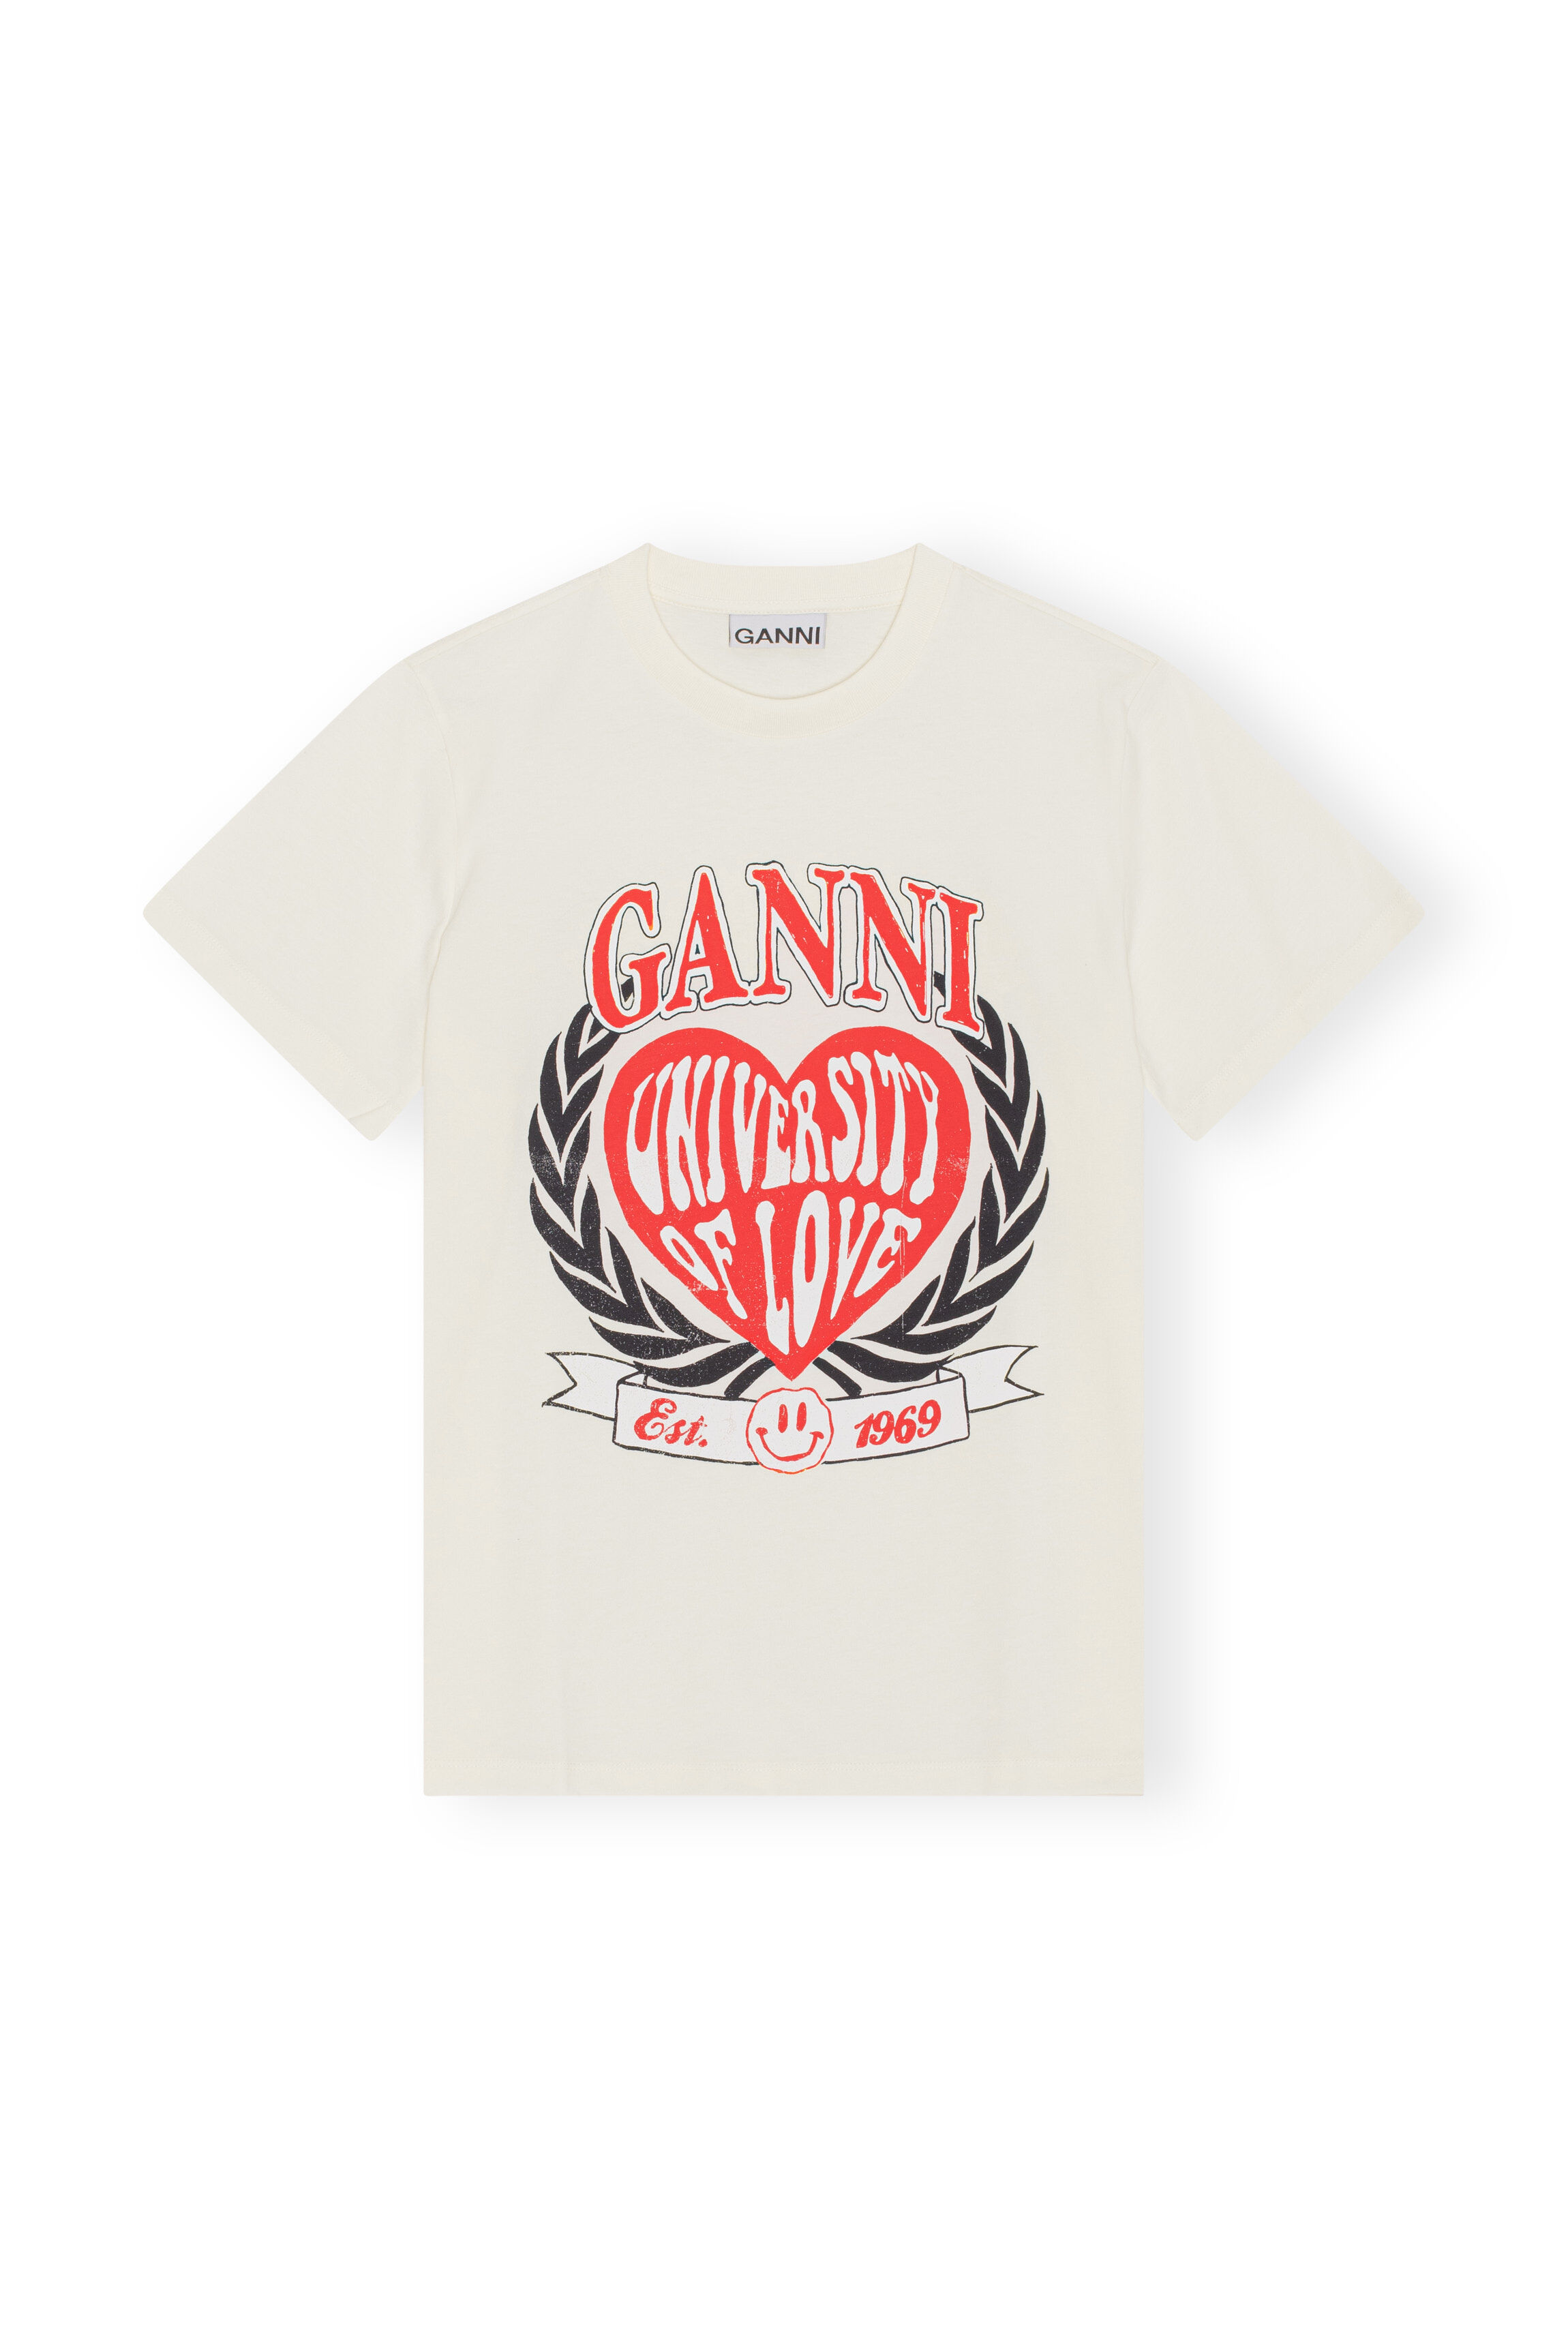 GANNI Exclusives | Online Exclusive Clothing | GANNI